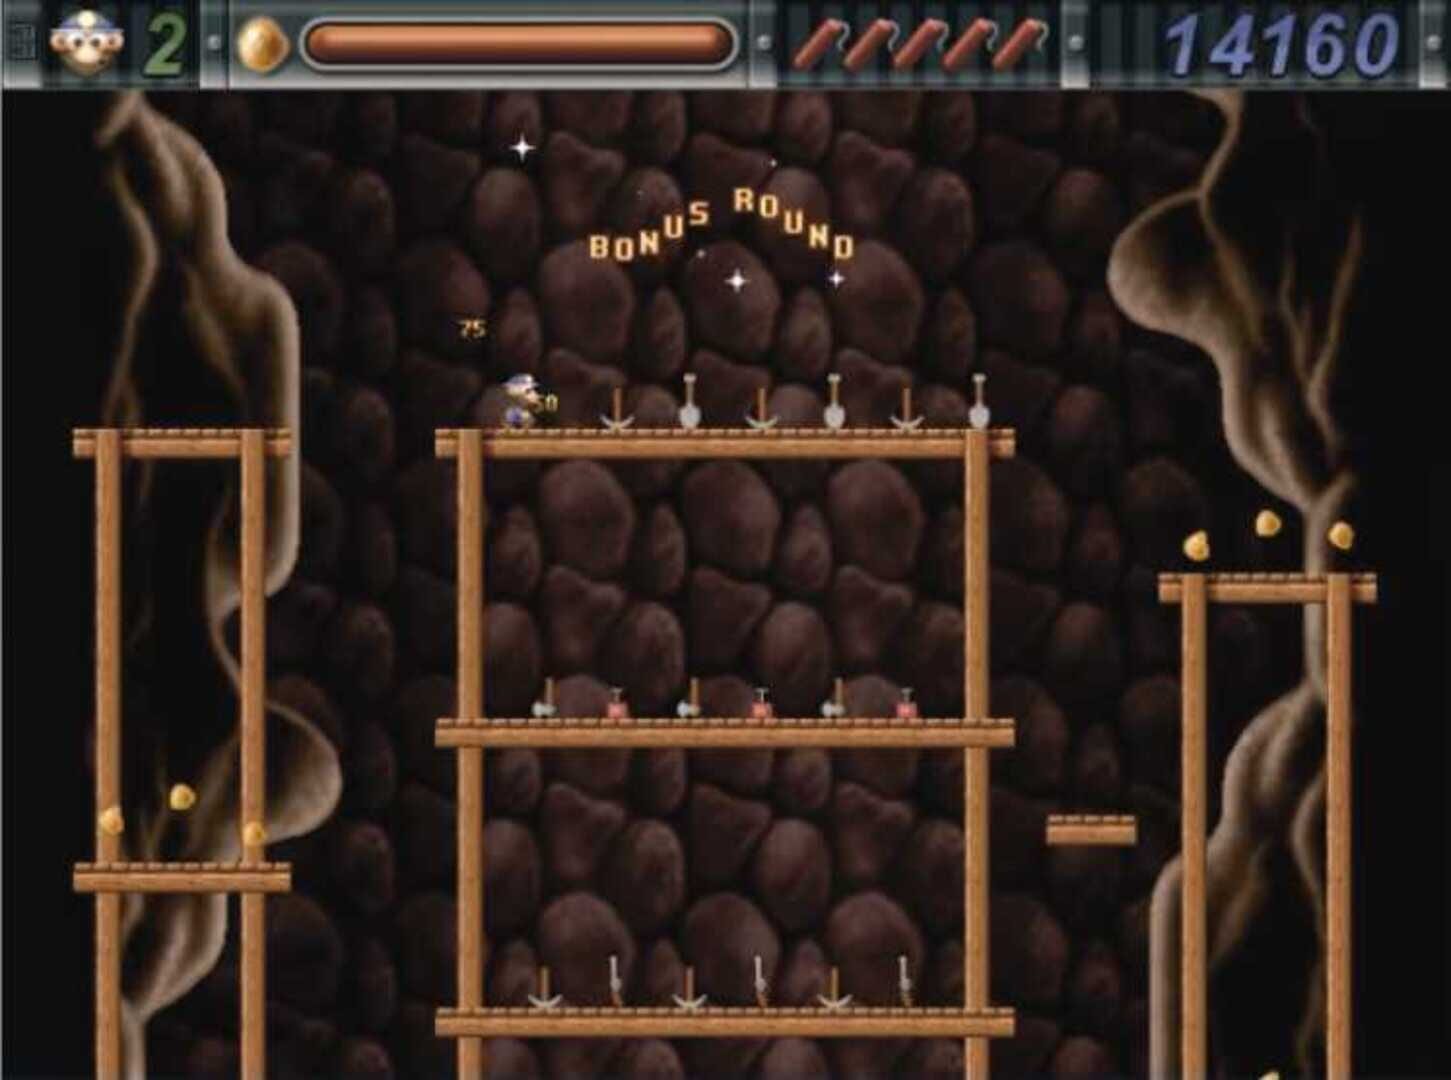 Gold Miner Joe screenshots